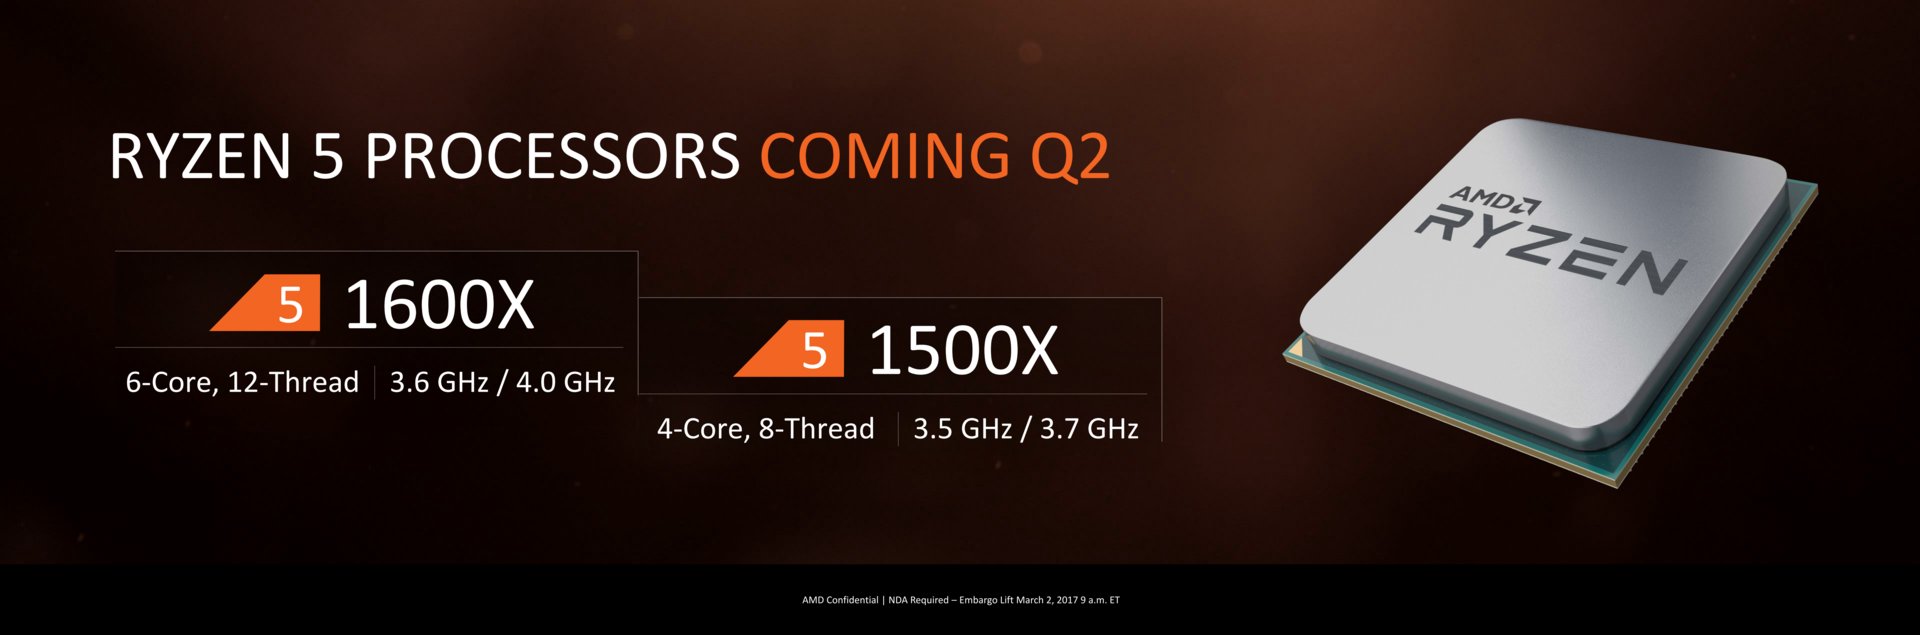 AMD-Ryzen-5-1600X-and-Ryzen-5-1500X.jpg